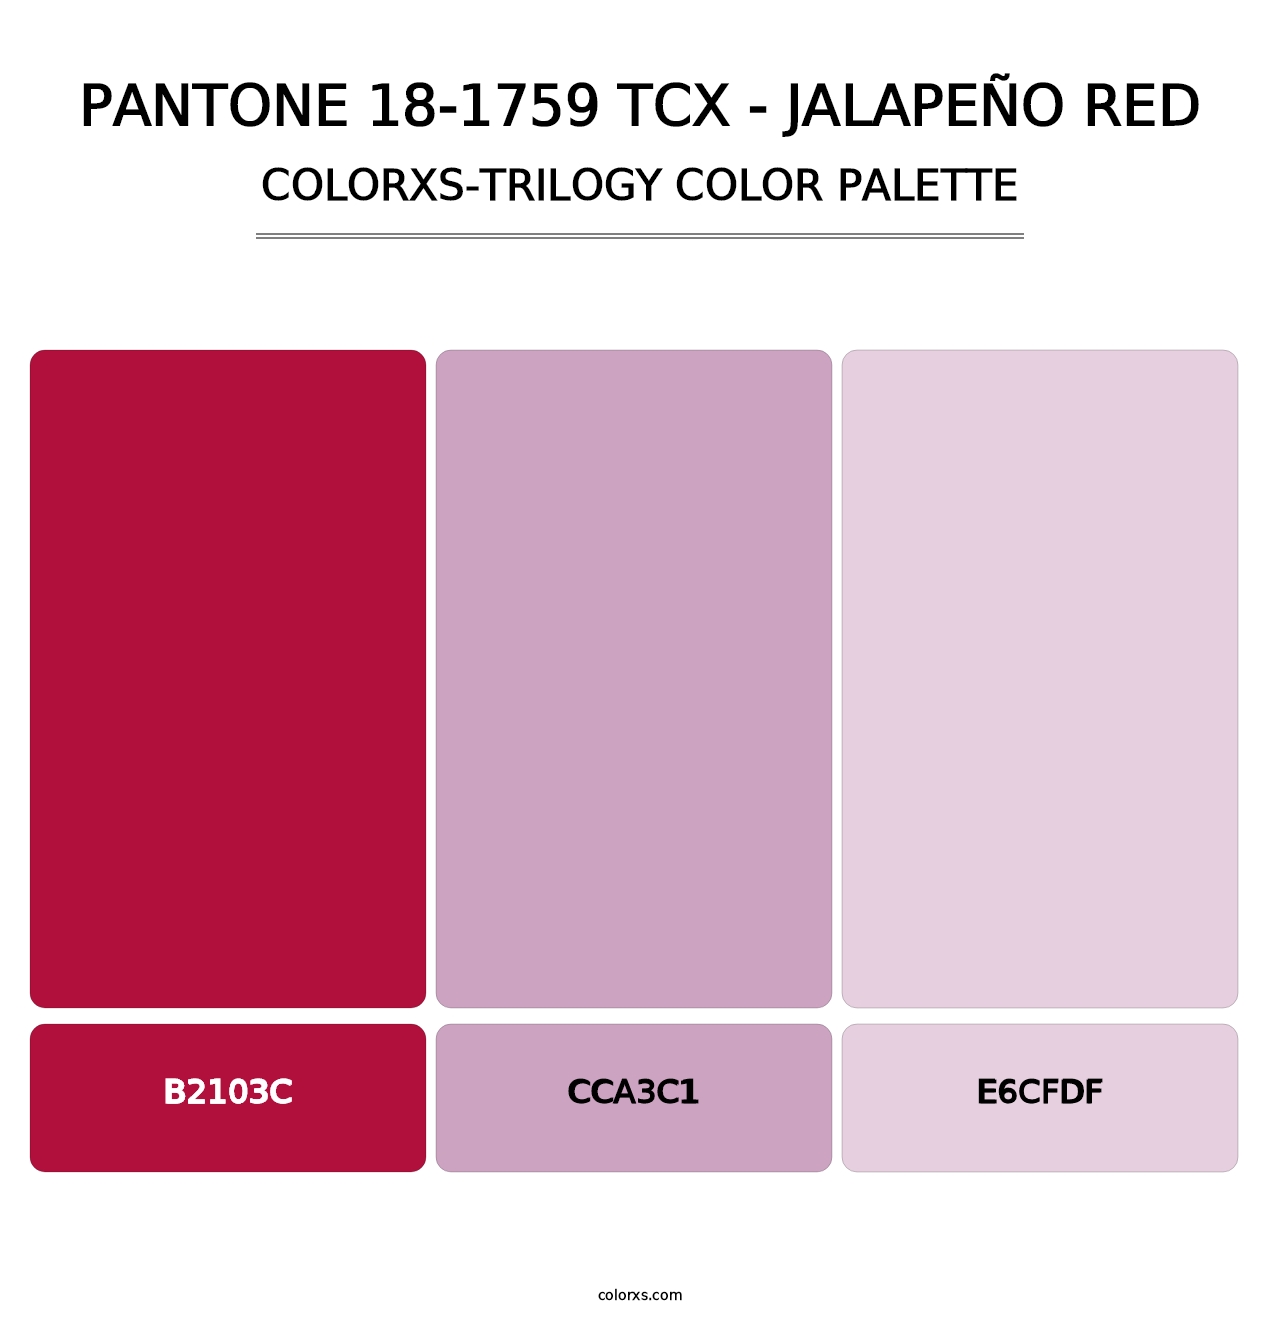 PANTONE 18-1759 TCX - Jalapeño Red - Colorxs Trilogy Palette